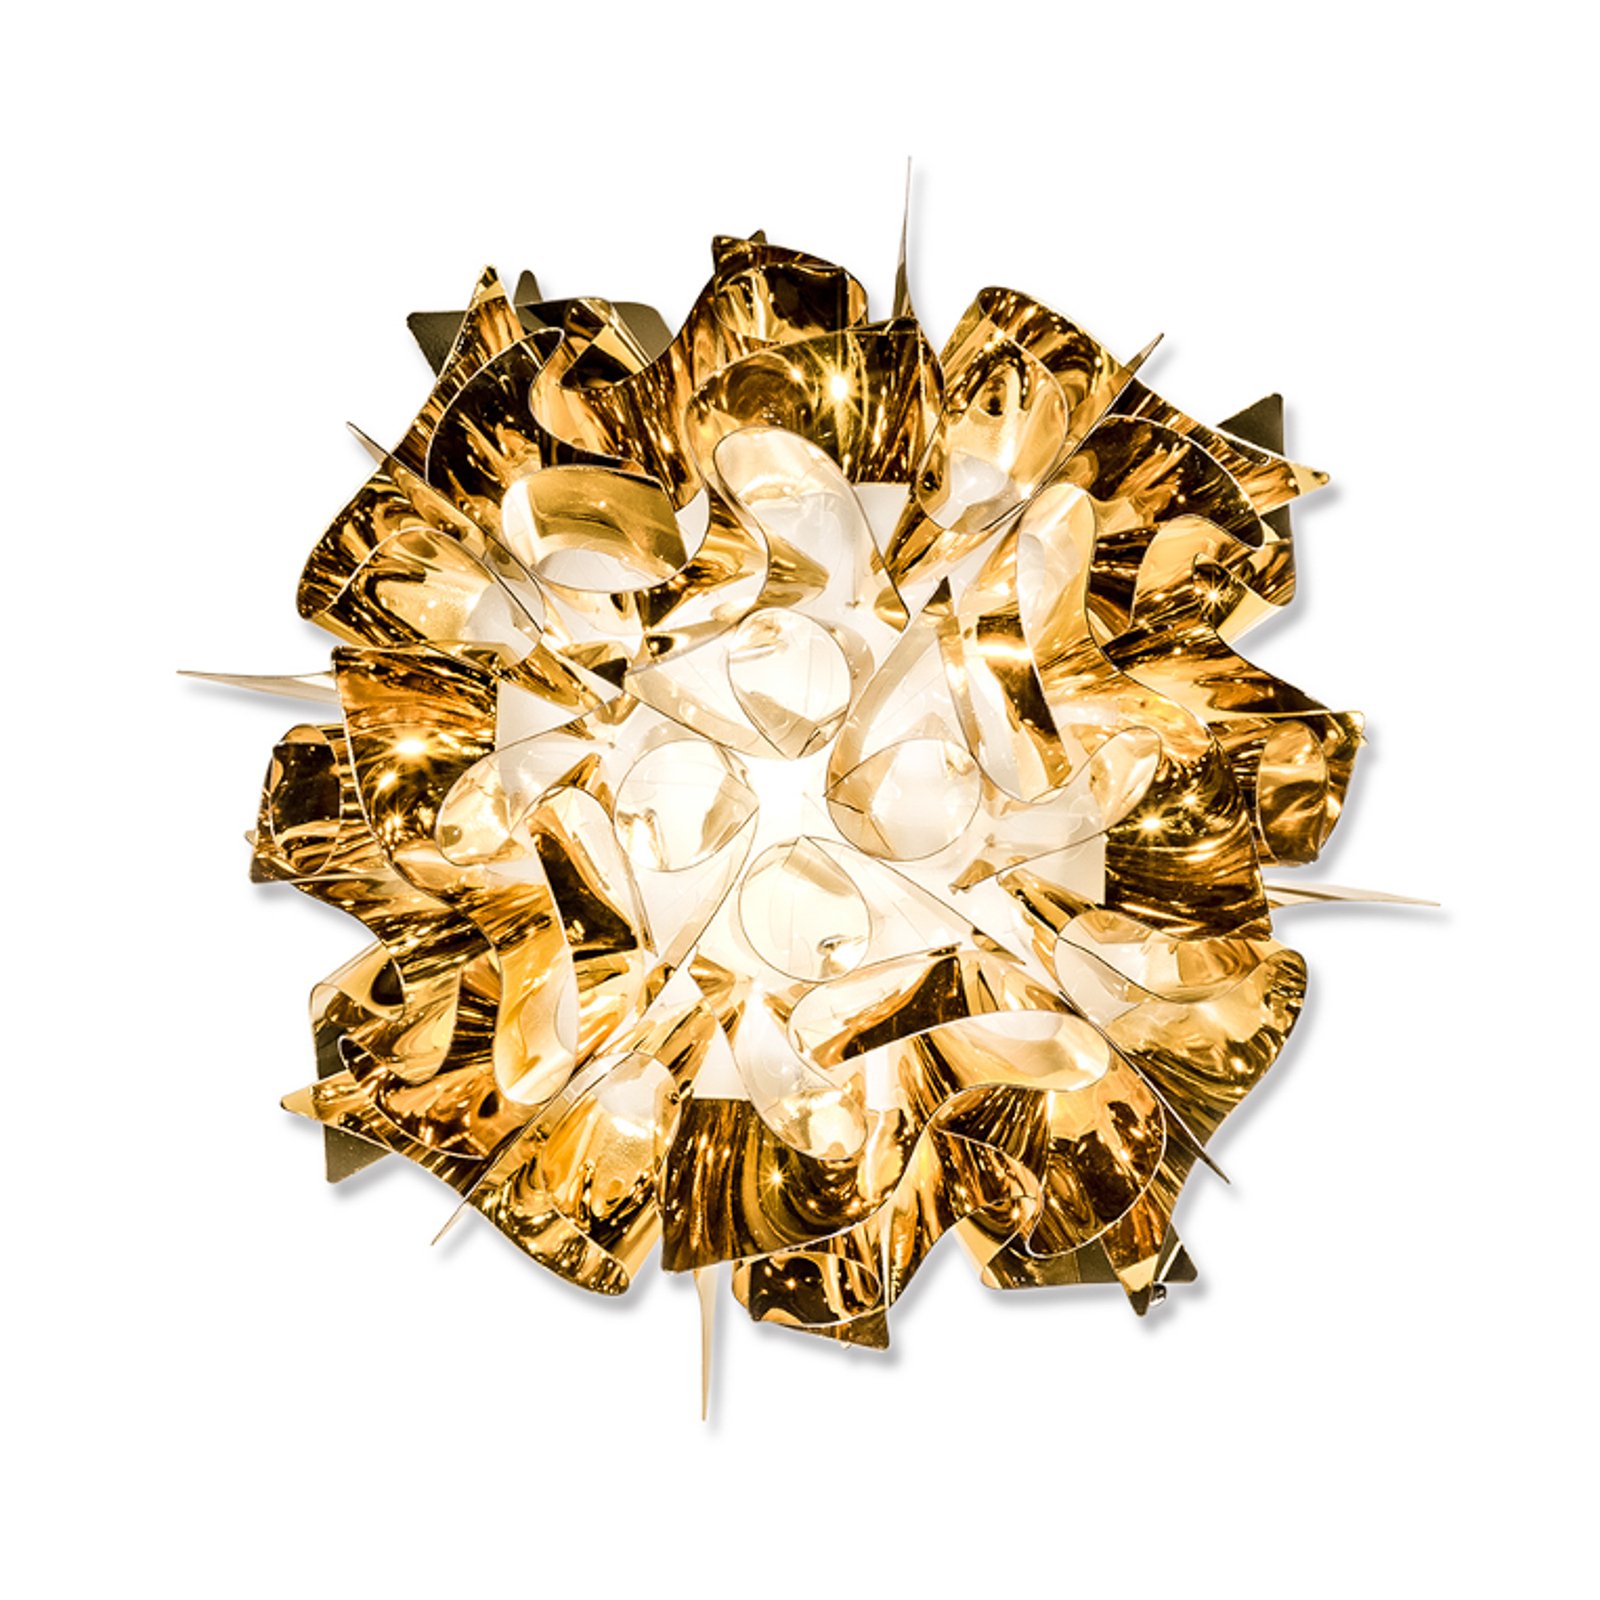 Slamp Veli Medium design-plafondlamp Ø 53cm goud